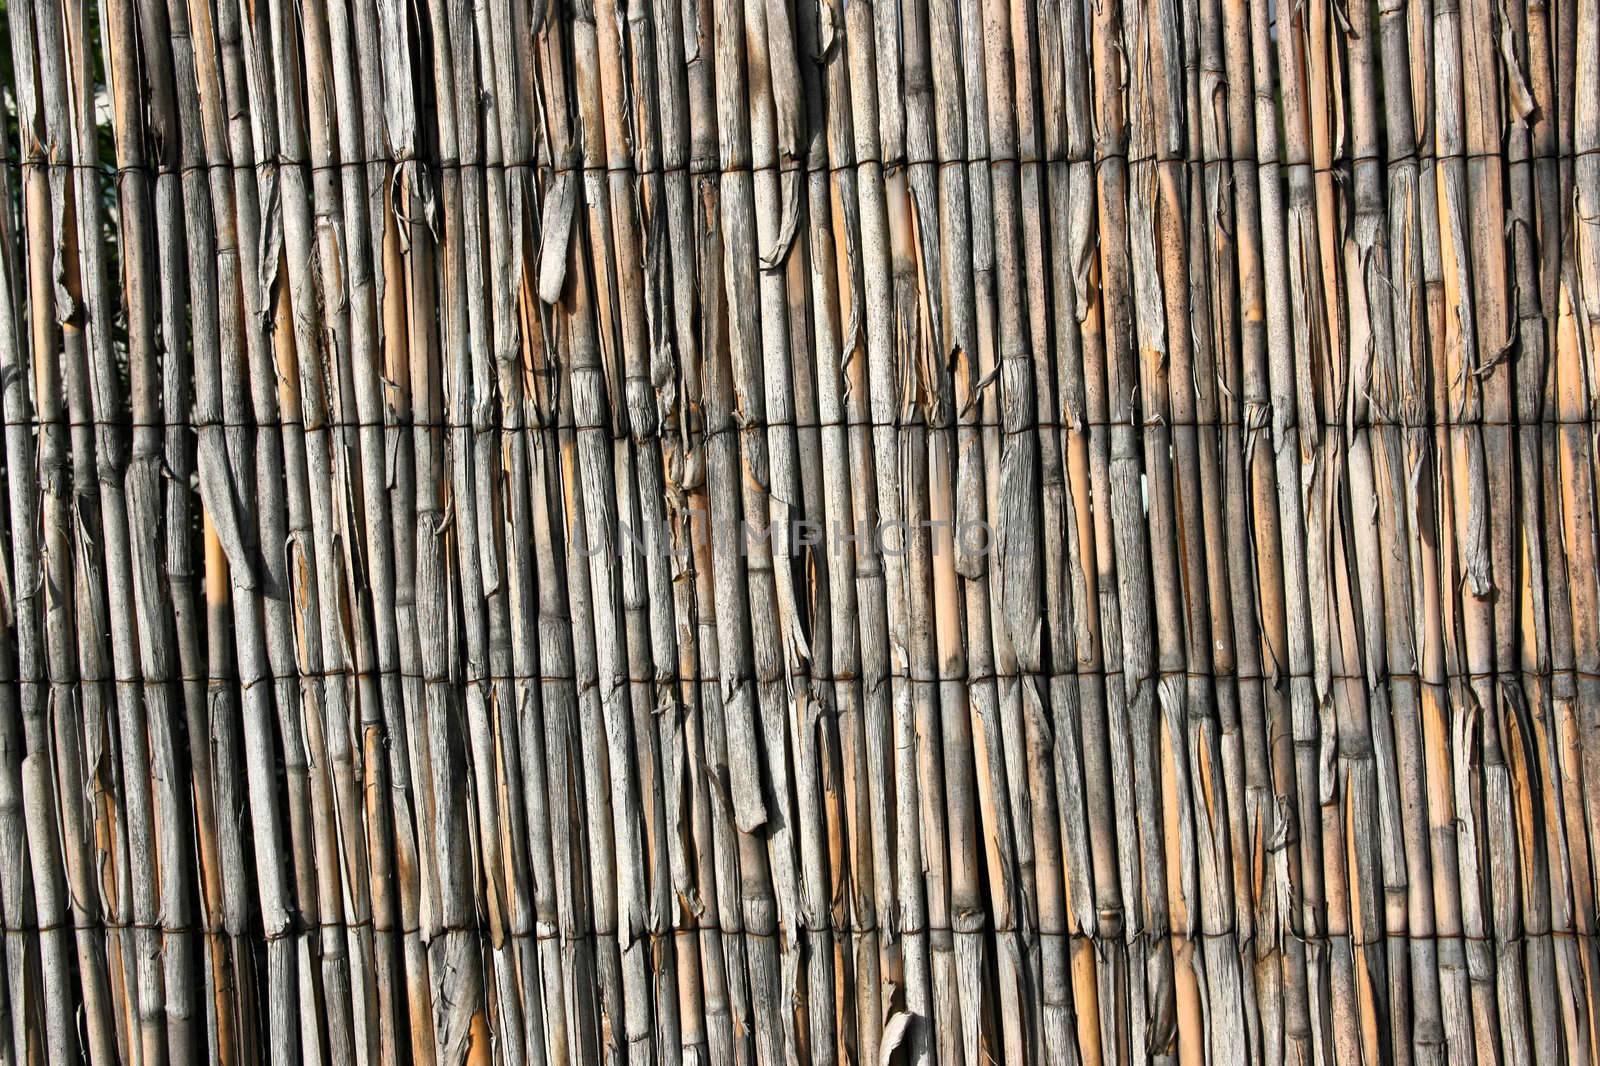 Bamboo texture by tupungato